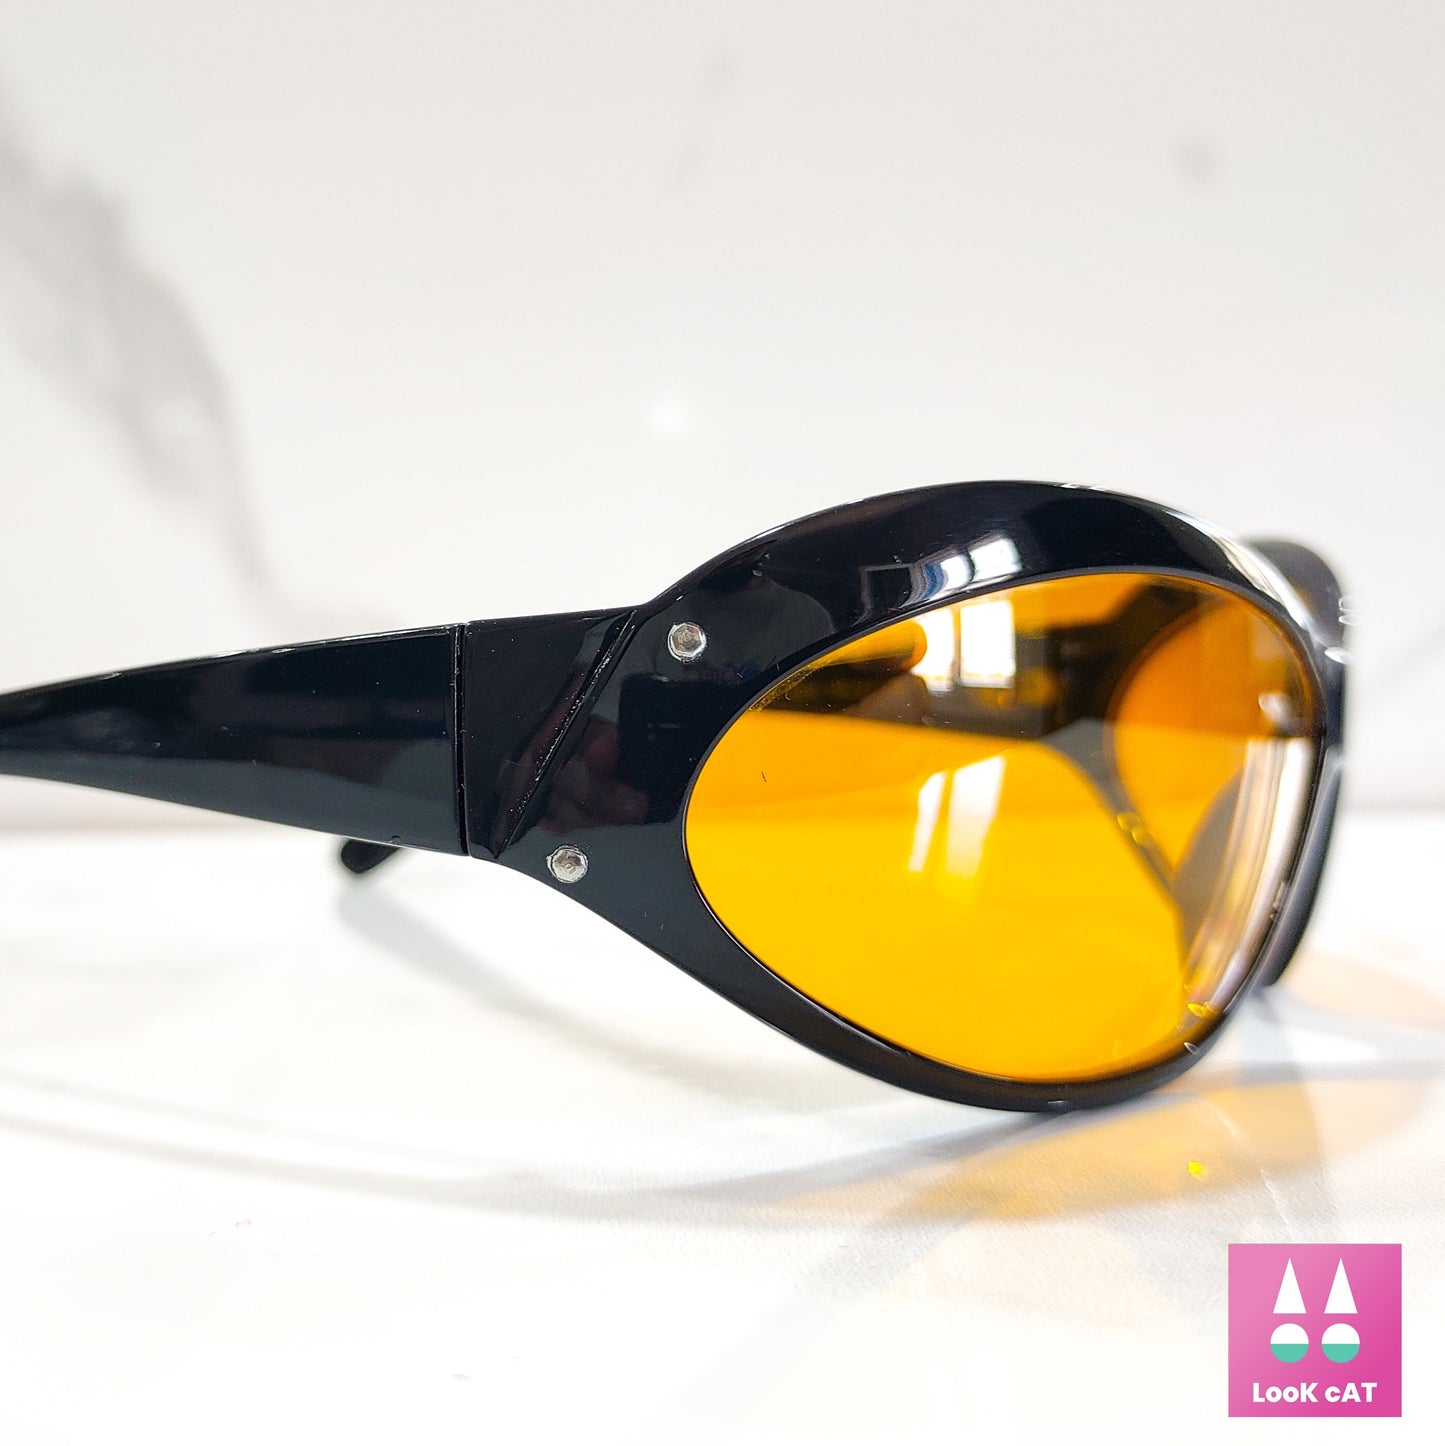 Prada 面具太阳镜型号 SPR 10F lunette brille y2k 色调